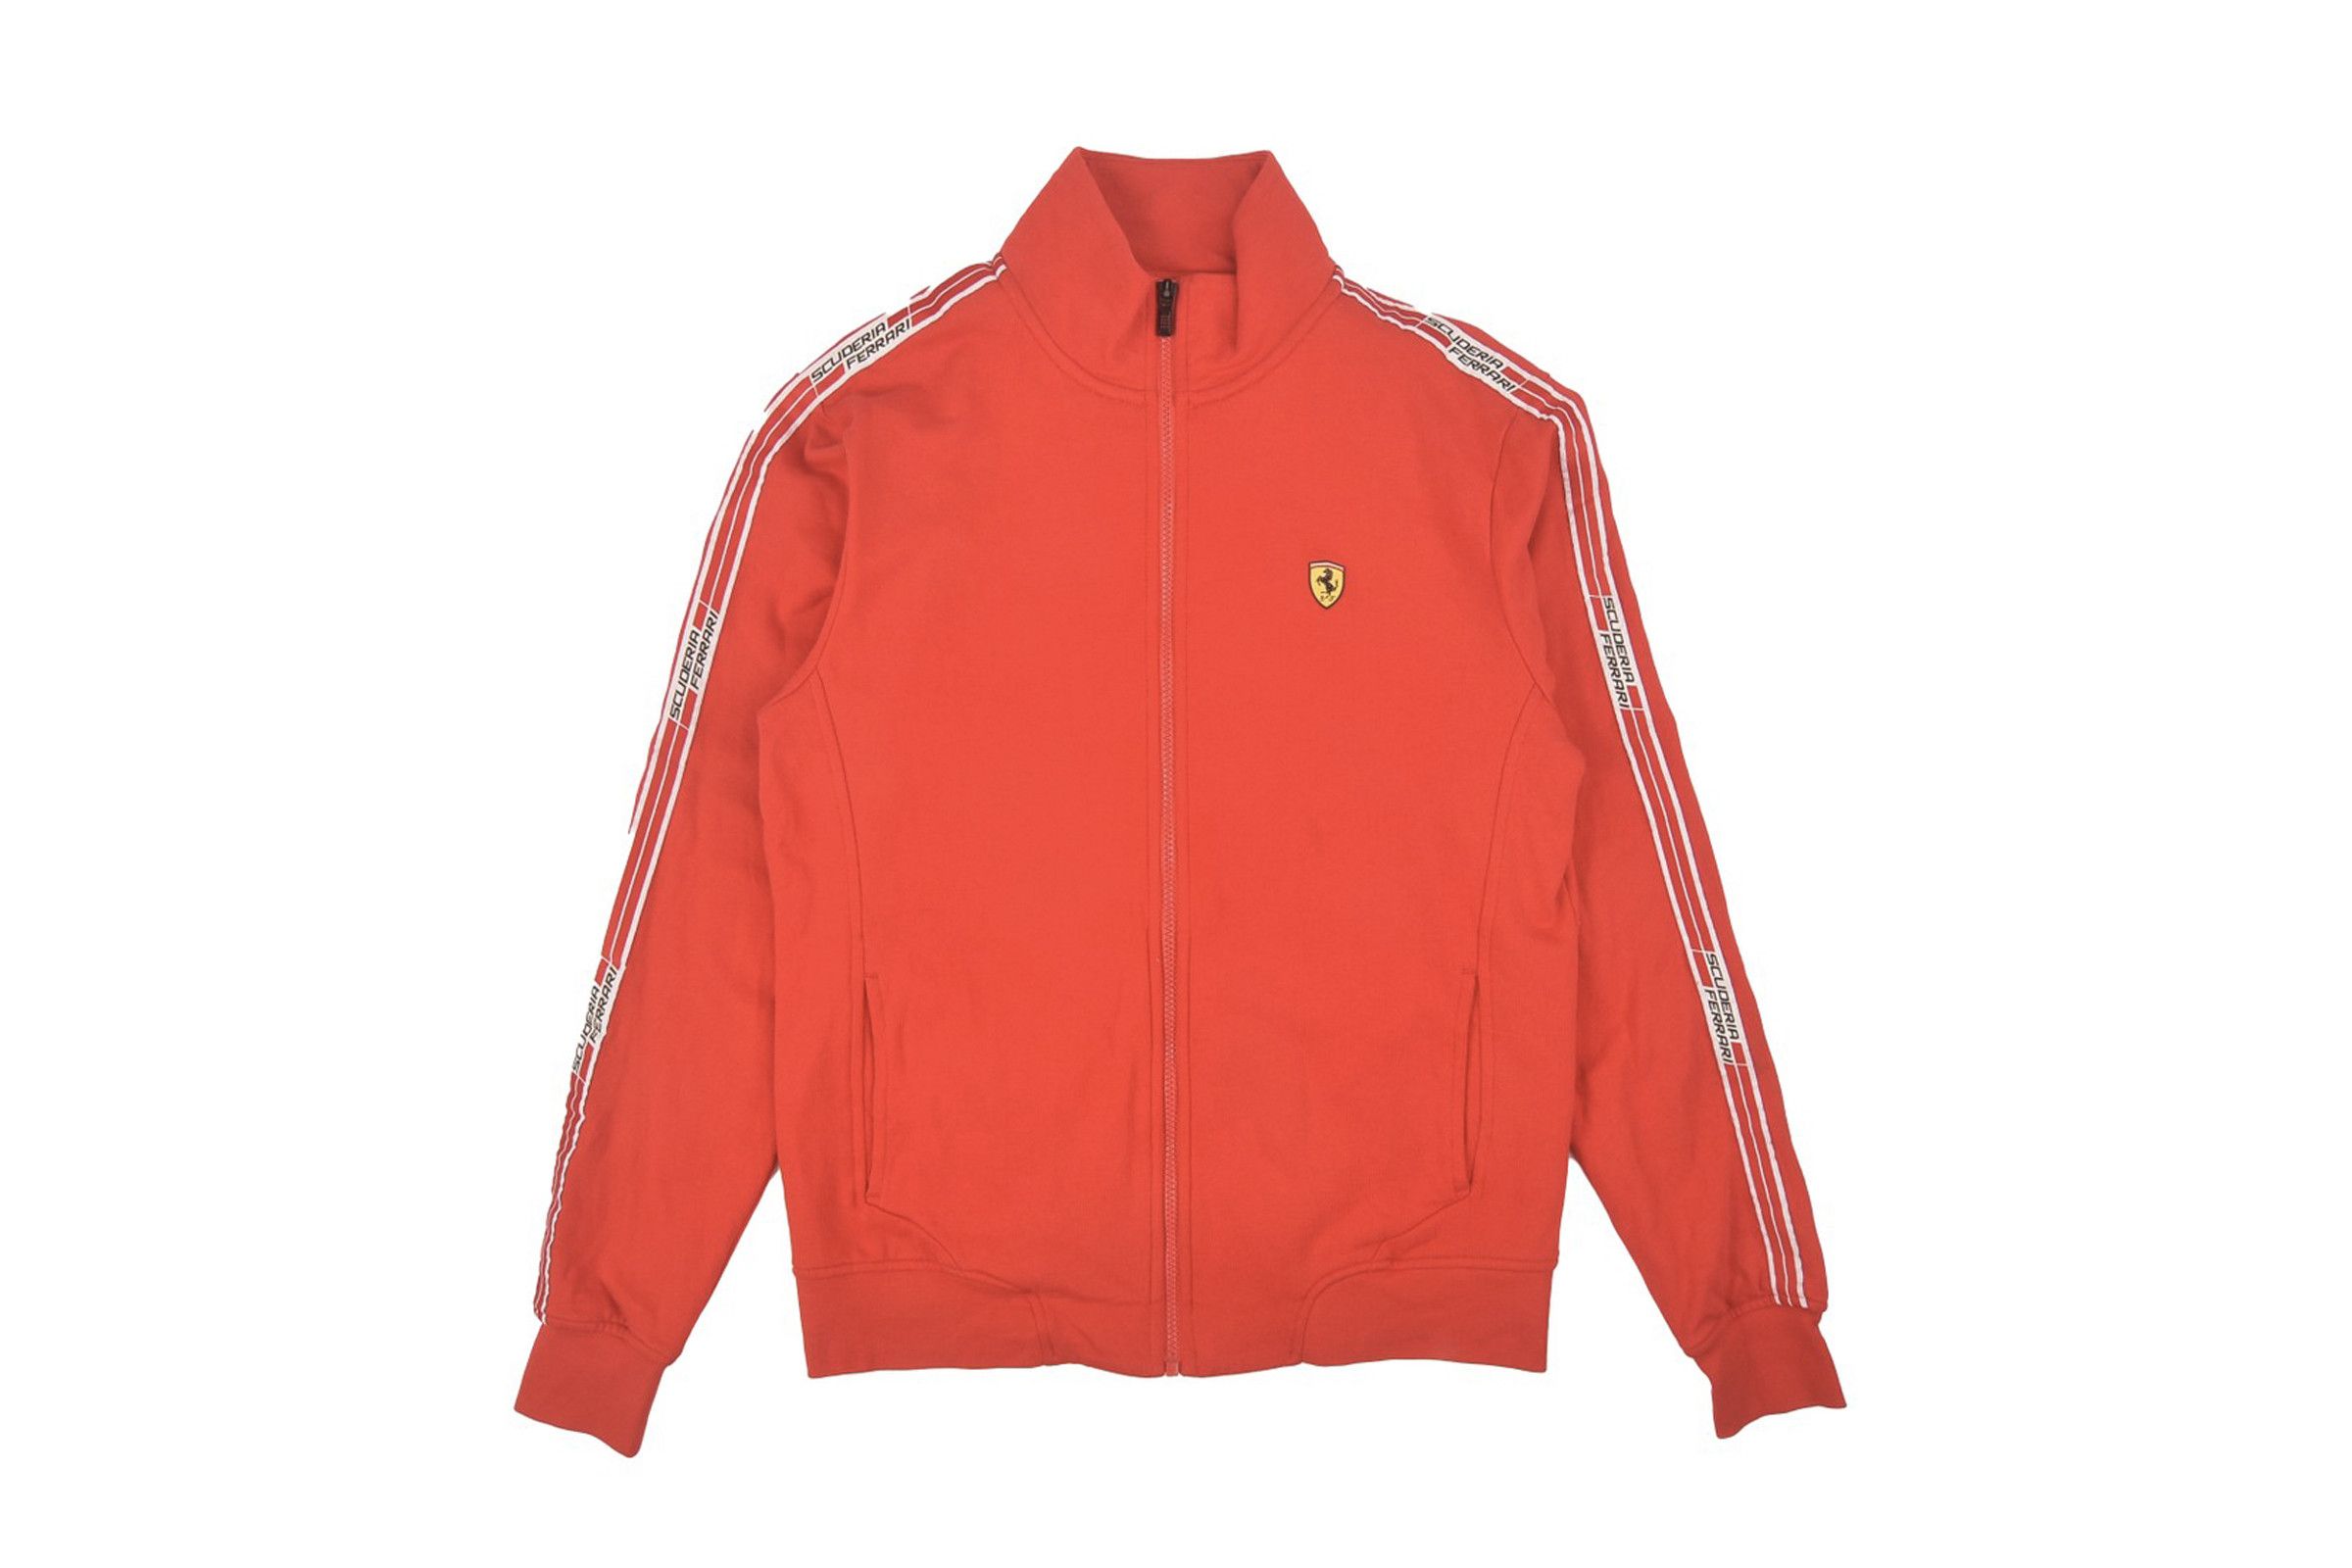 7. Ferrari Merchandise Collection